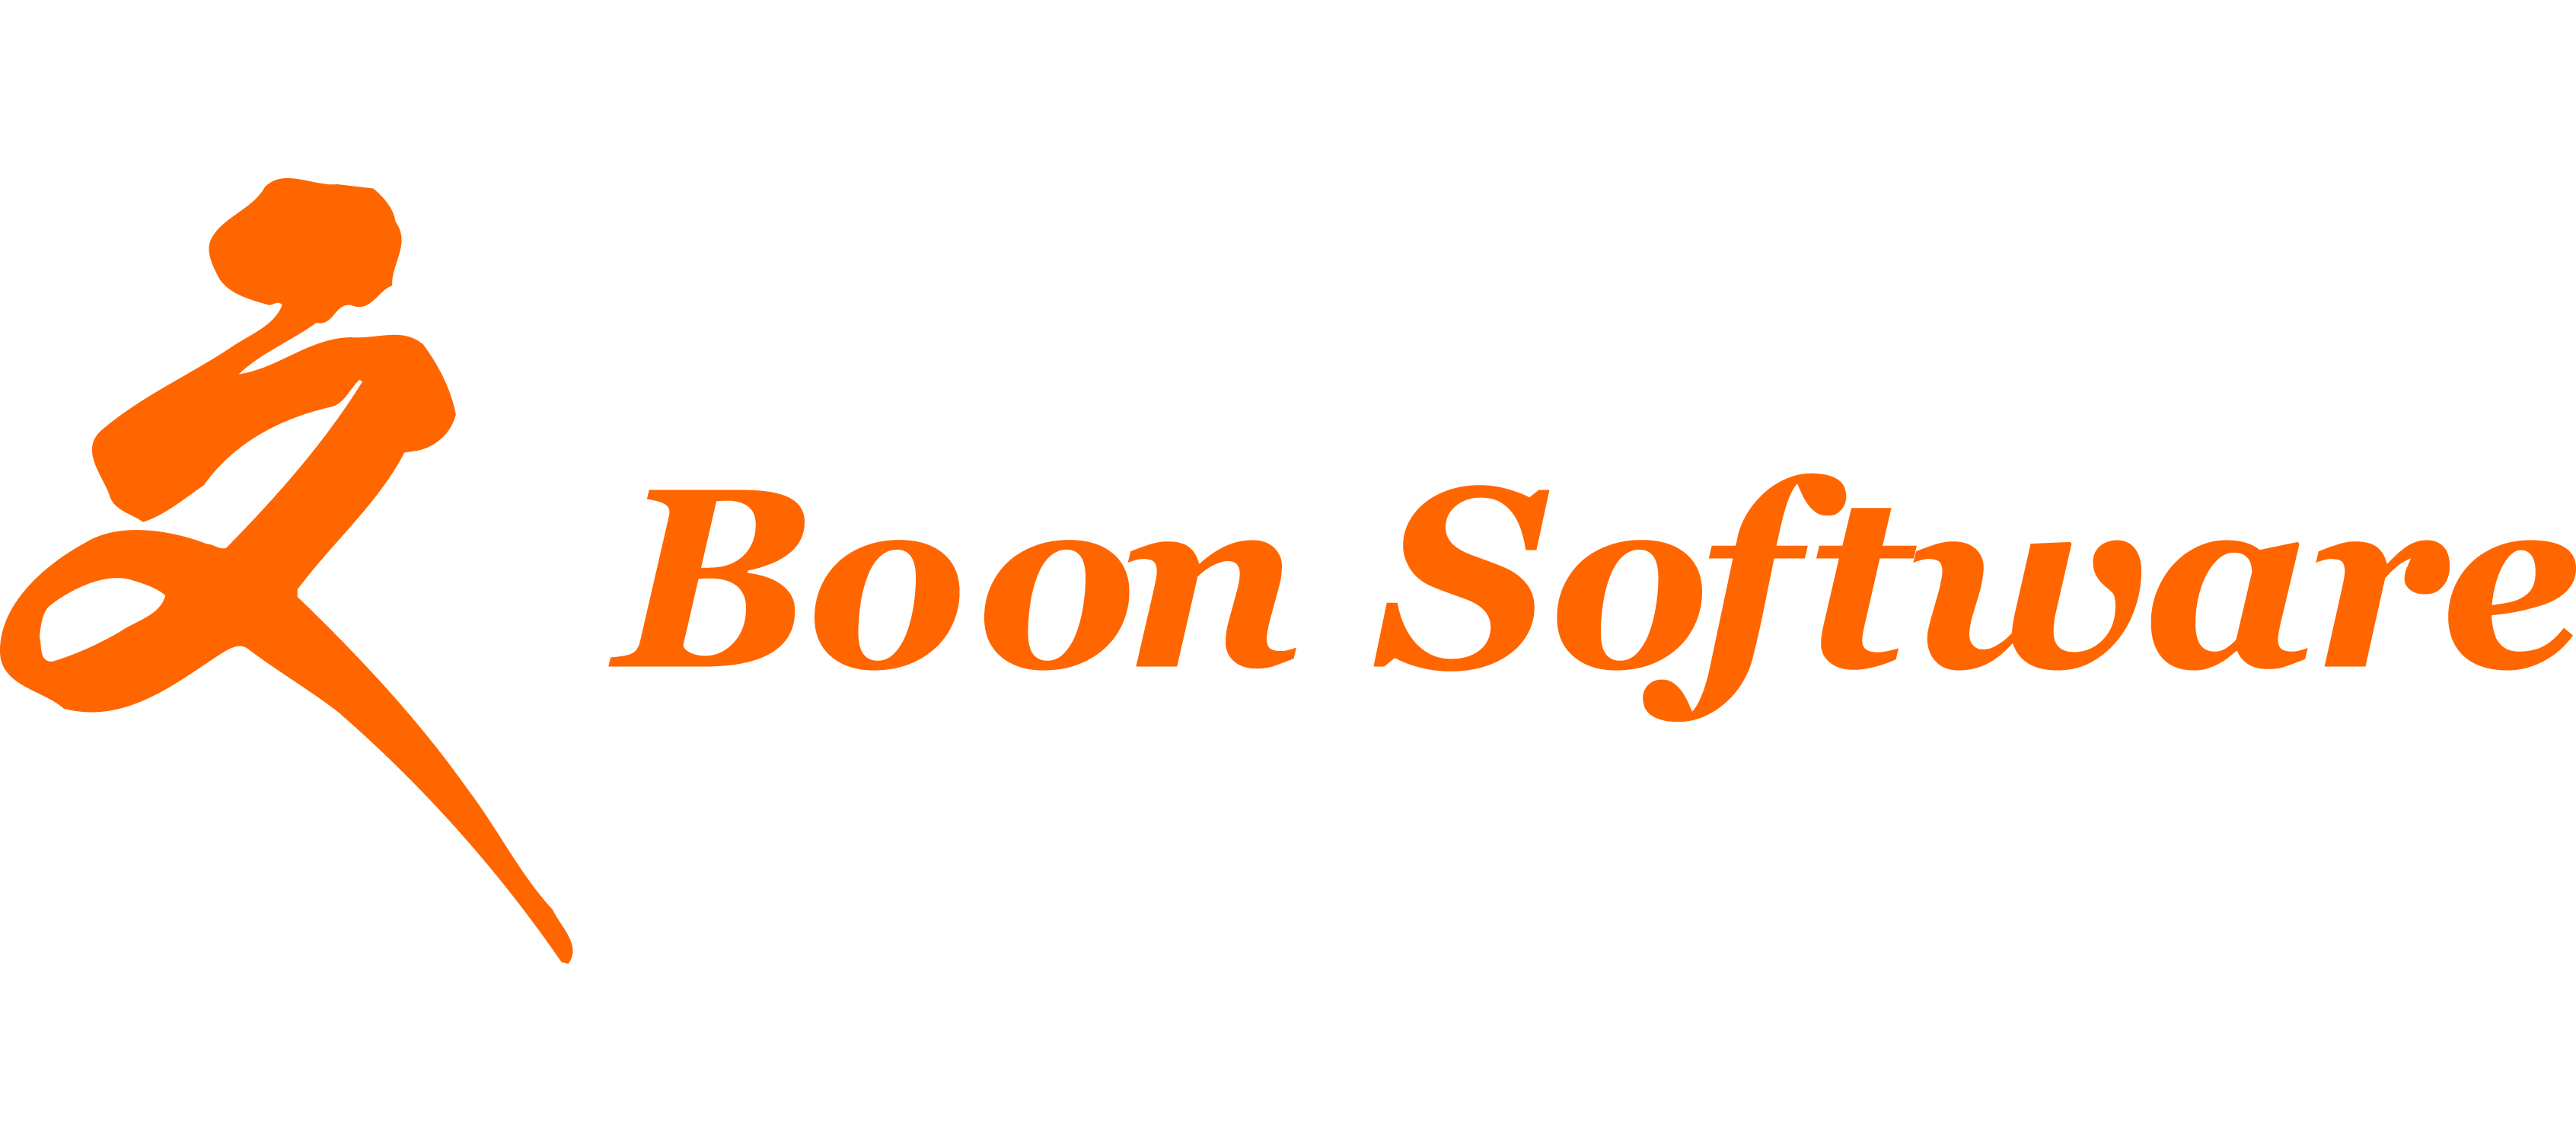 PT Boon Software